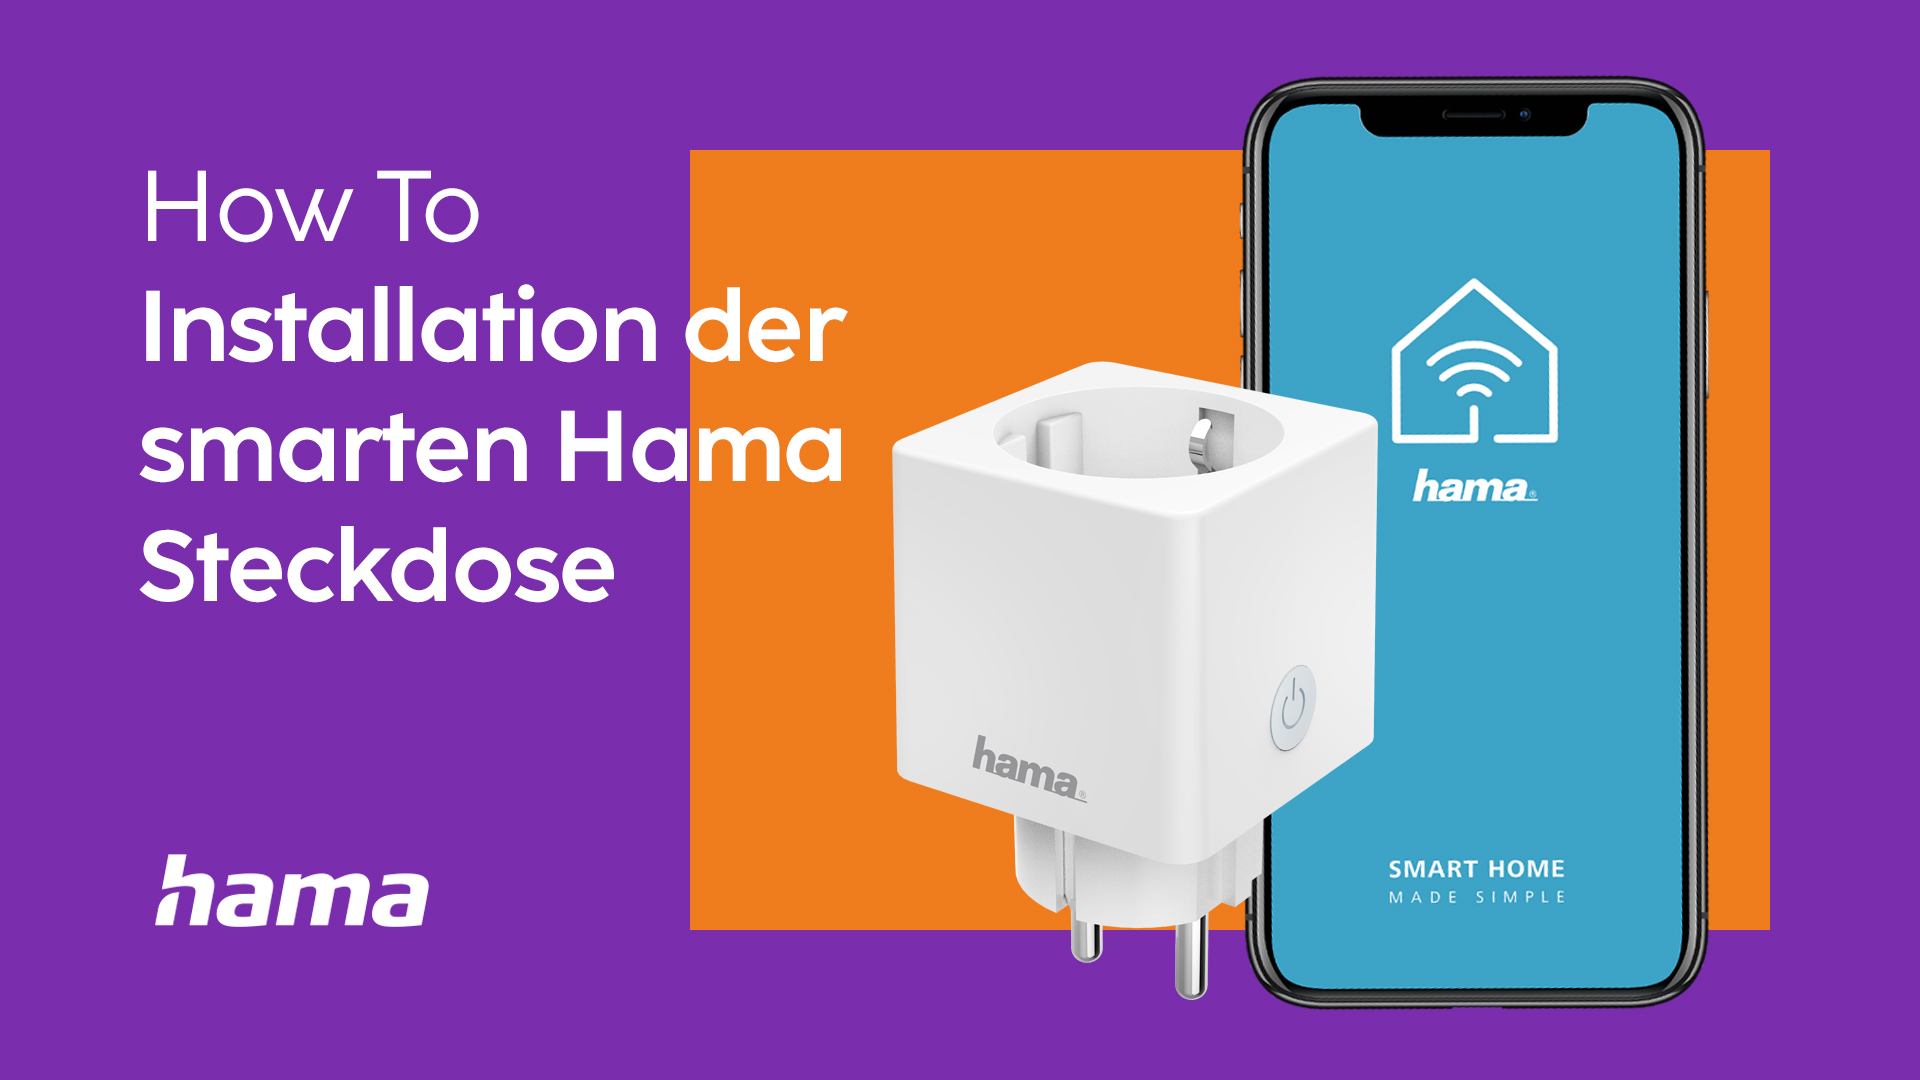 Hama Smart Home Steckdosen & elektronische Geräte einrichten per App mit Alexa & Google Assistant